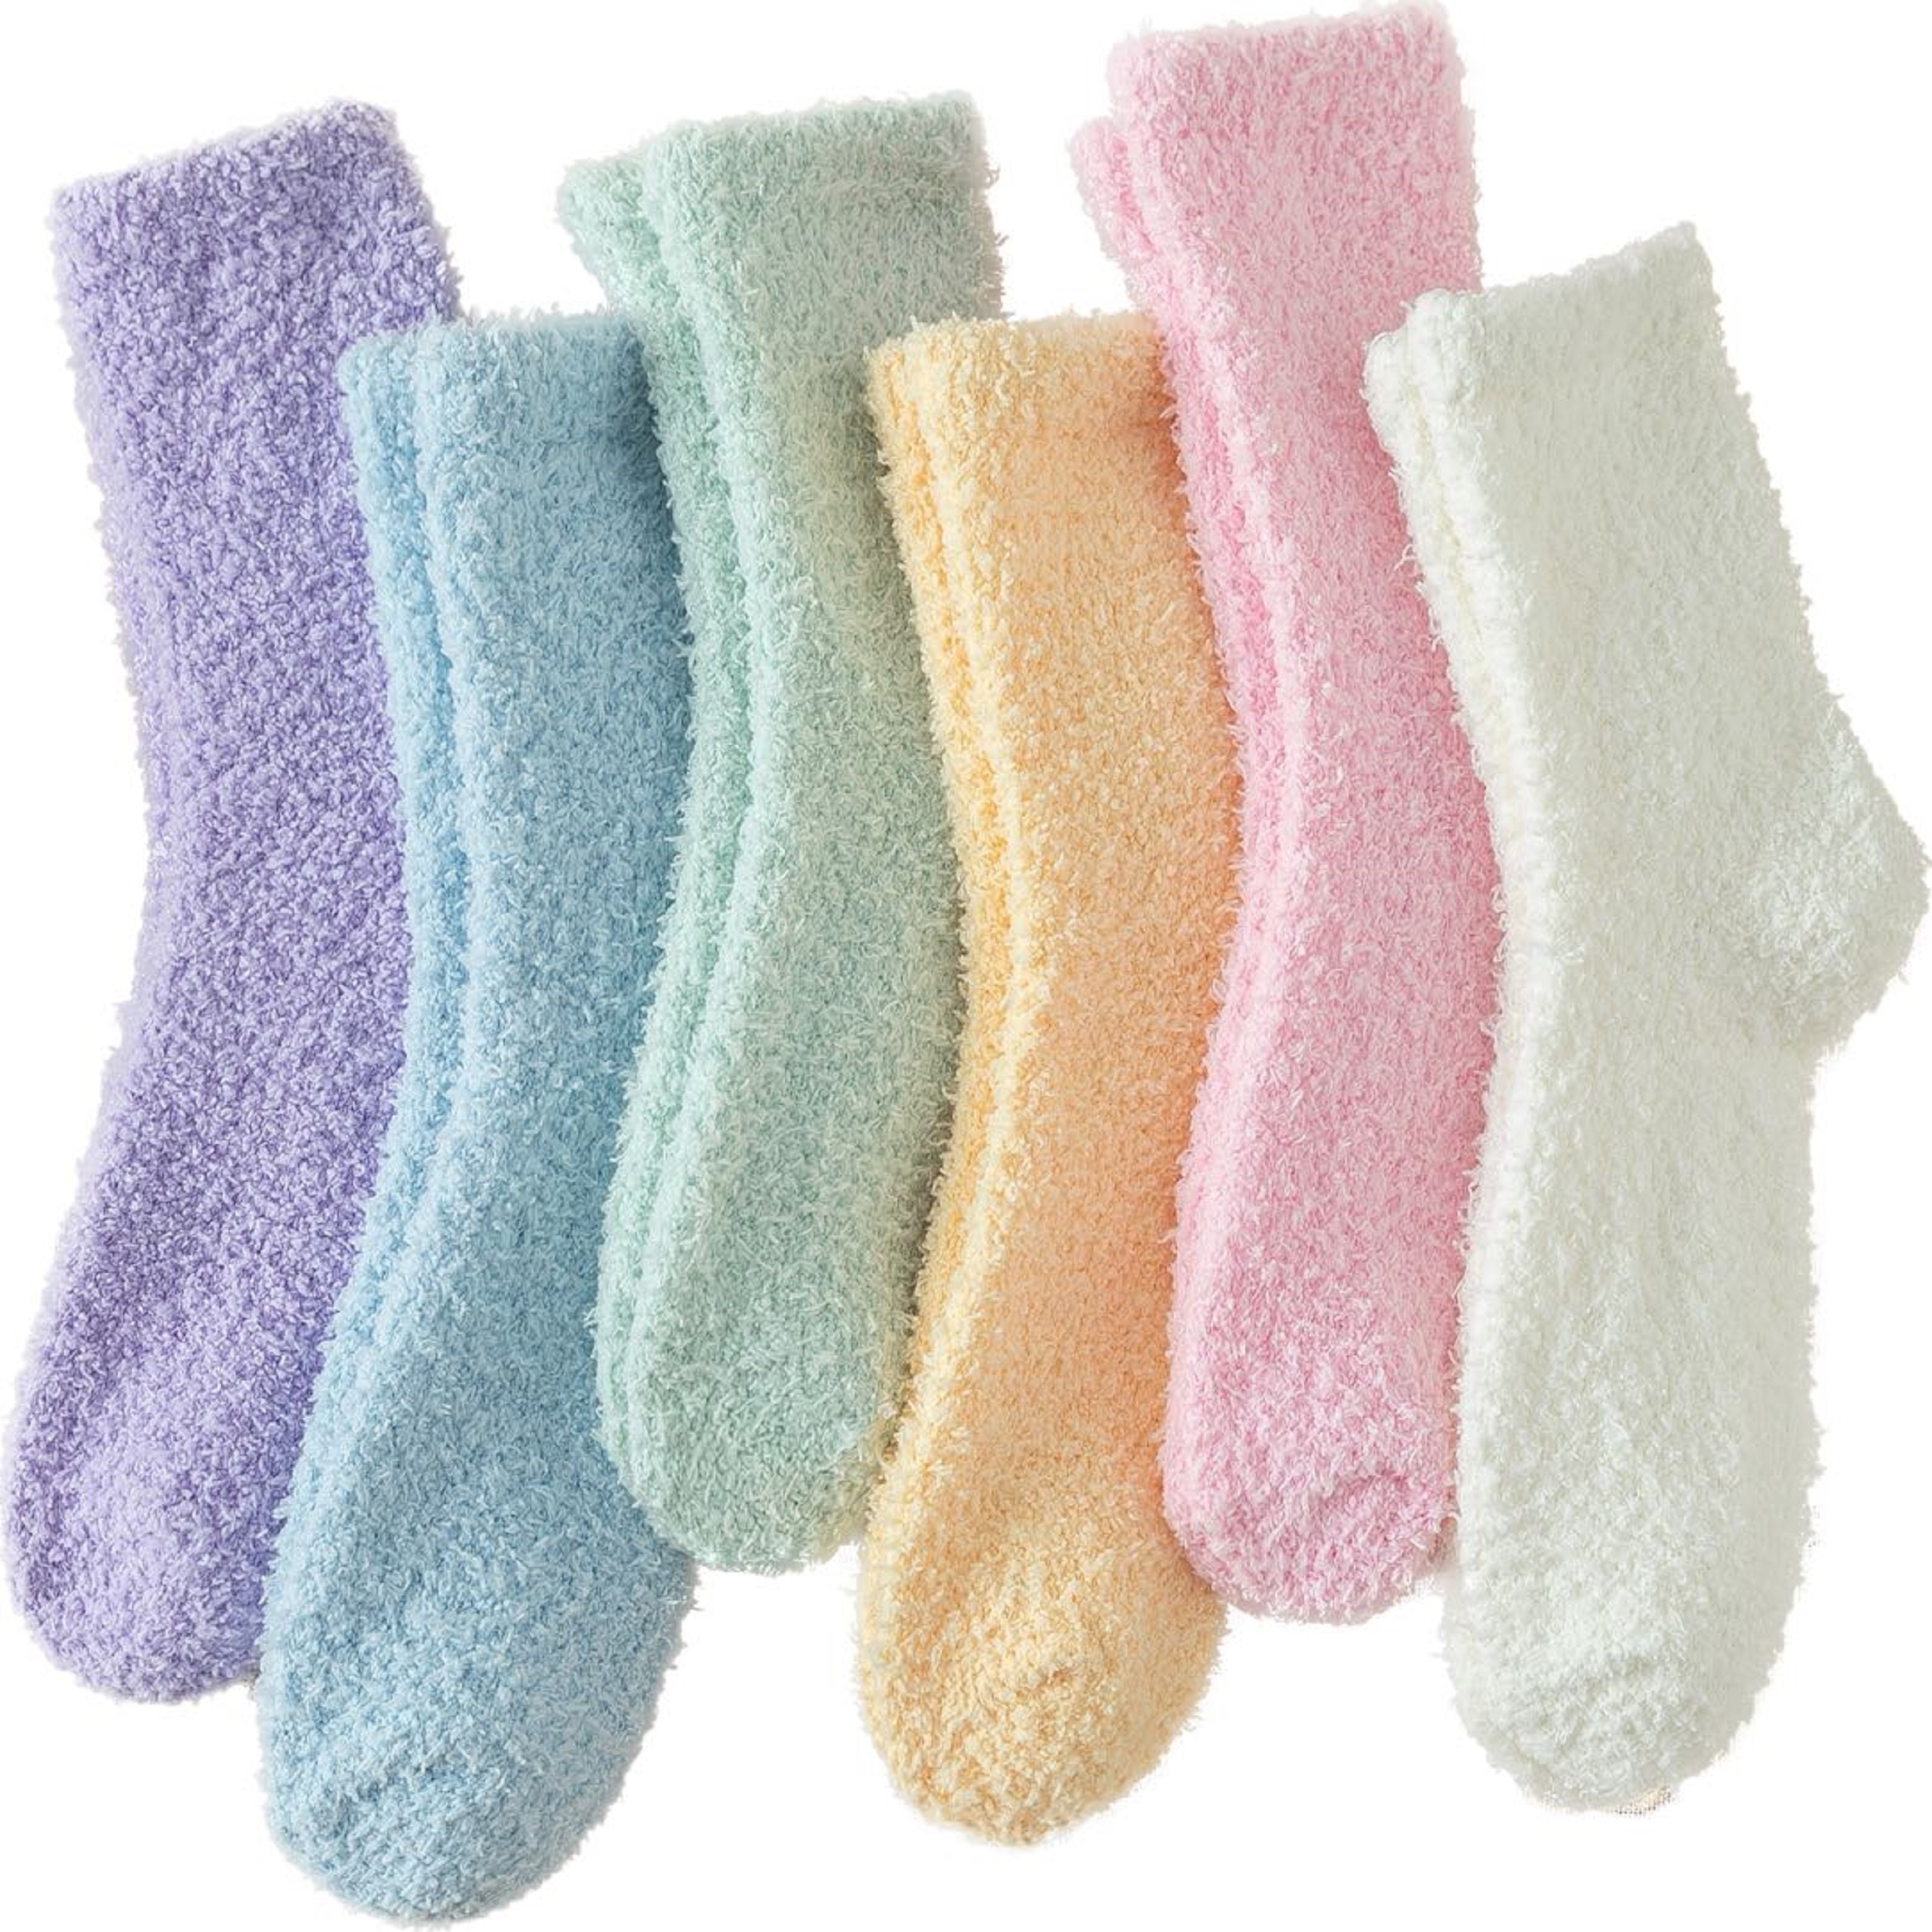 

6 Pairs Solid Fuzzy Socks, Soft & Warm Home Sleeping Socks, Women's Stockings & Hosiery